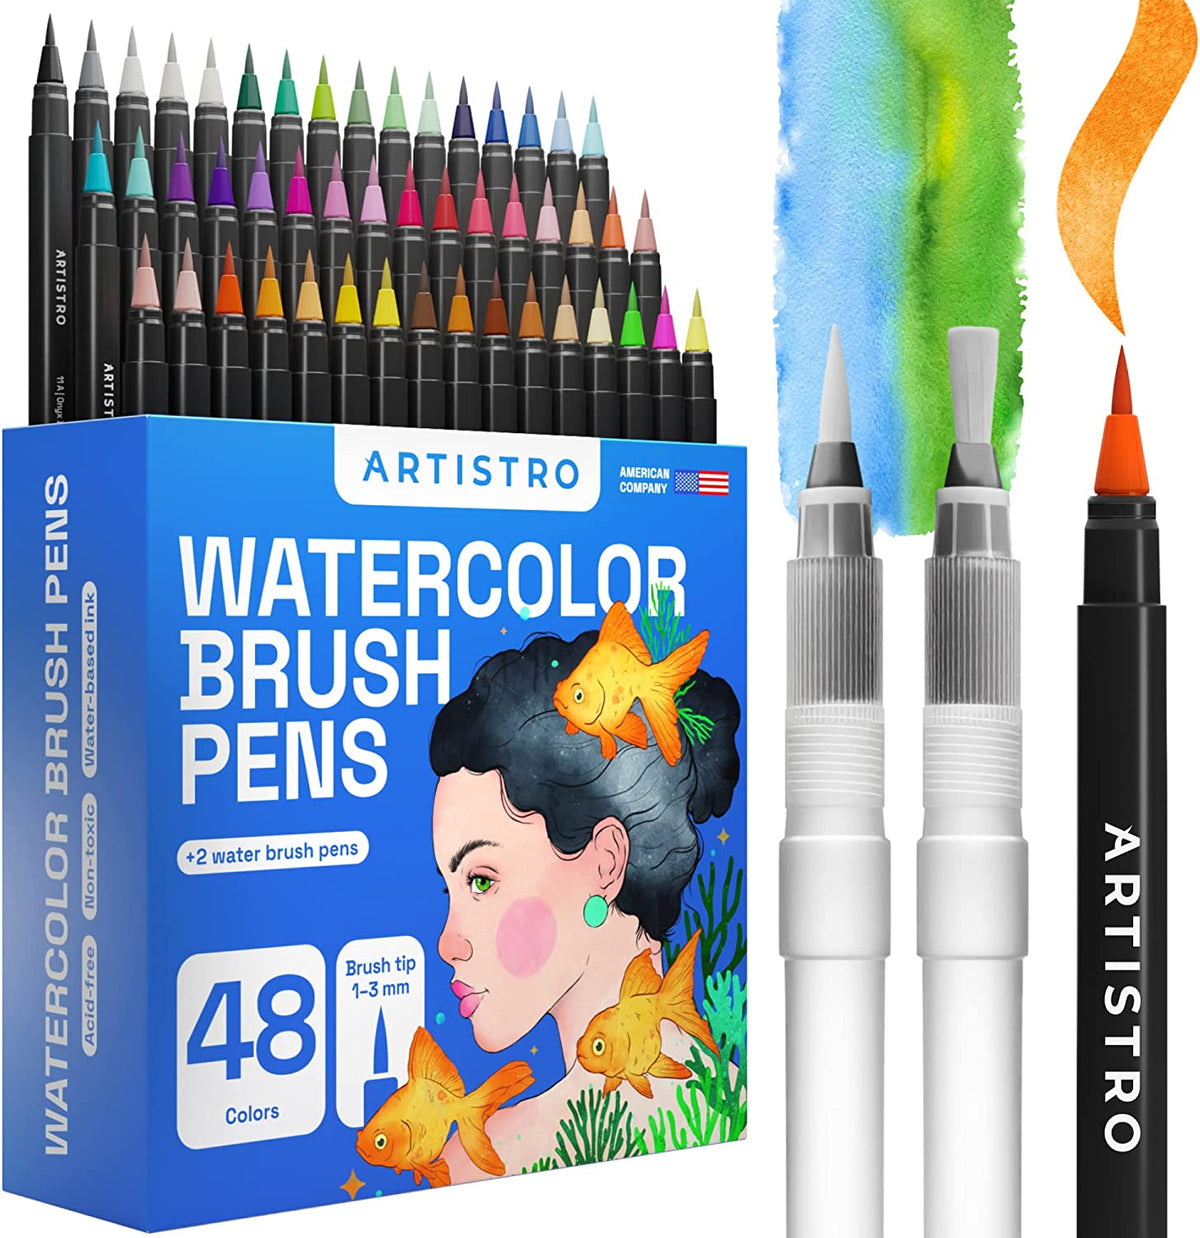 Arrtx 15mm Jumbo Acrylic Markers, 10 Colors Acrylic Paint Pens for Rock  Stone Ceramic Porcelain Mug Wood Fabric Canvas Painting